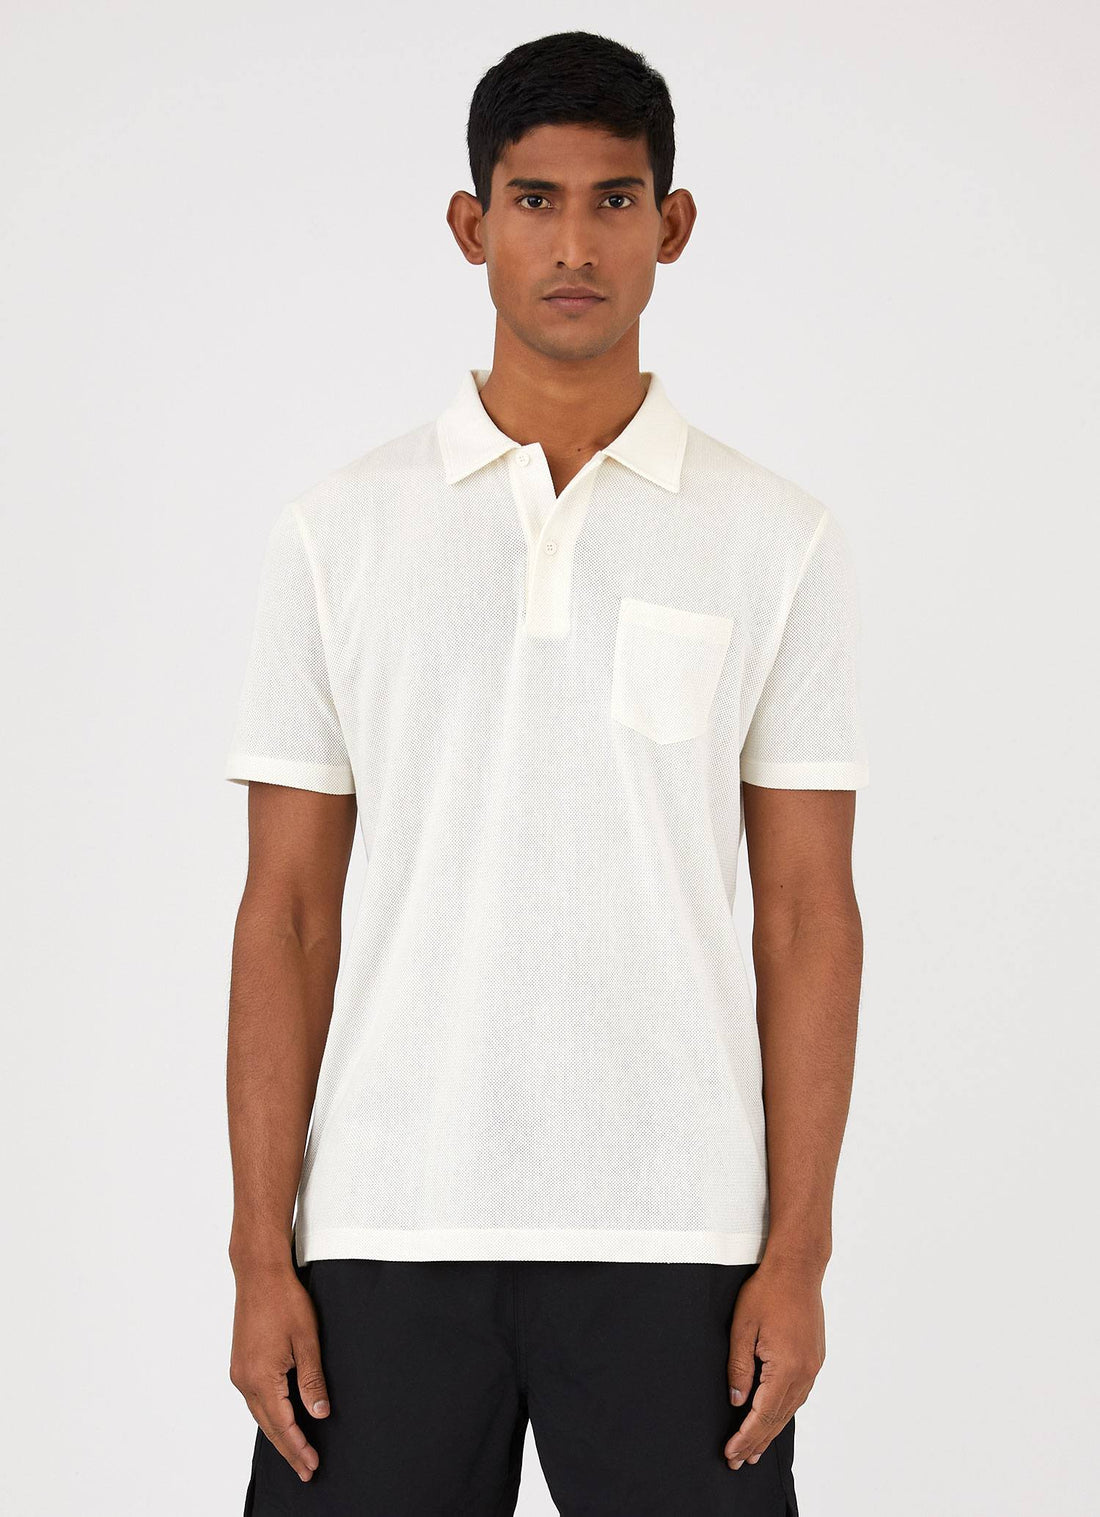 Men's Riviera Polo Shirt in Archive White